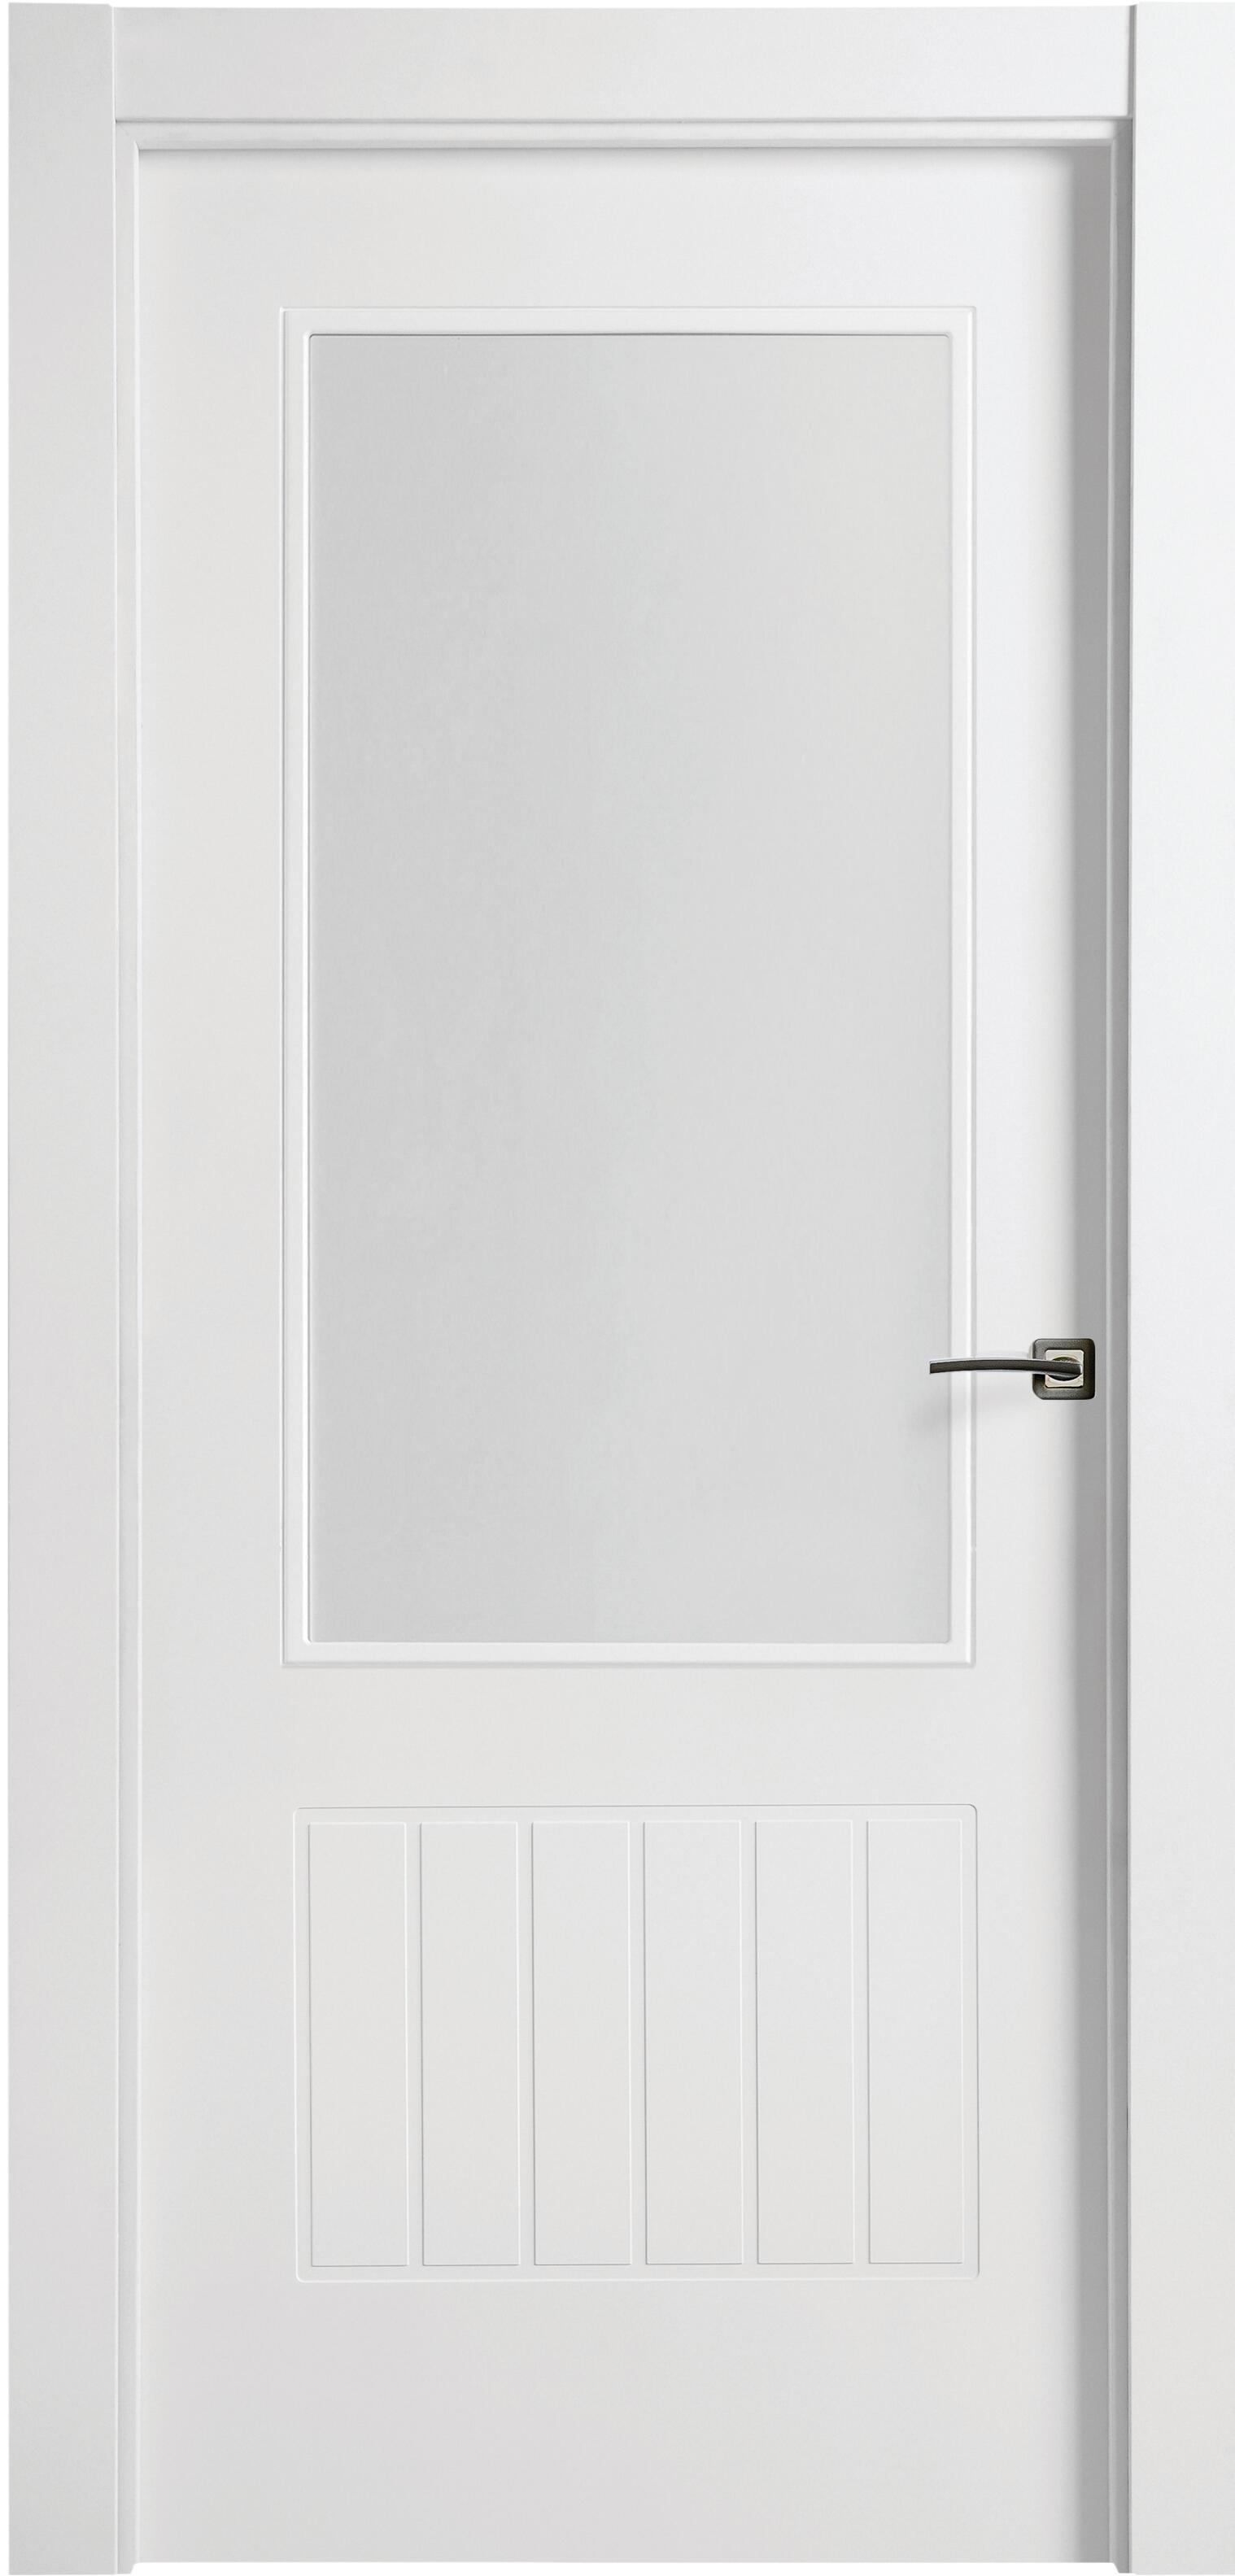 Puerta madison plus blanco apertura izquierda con cristal de 82.5 cm